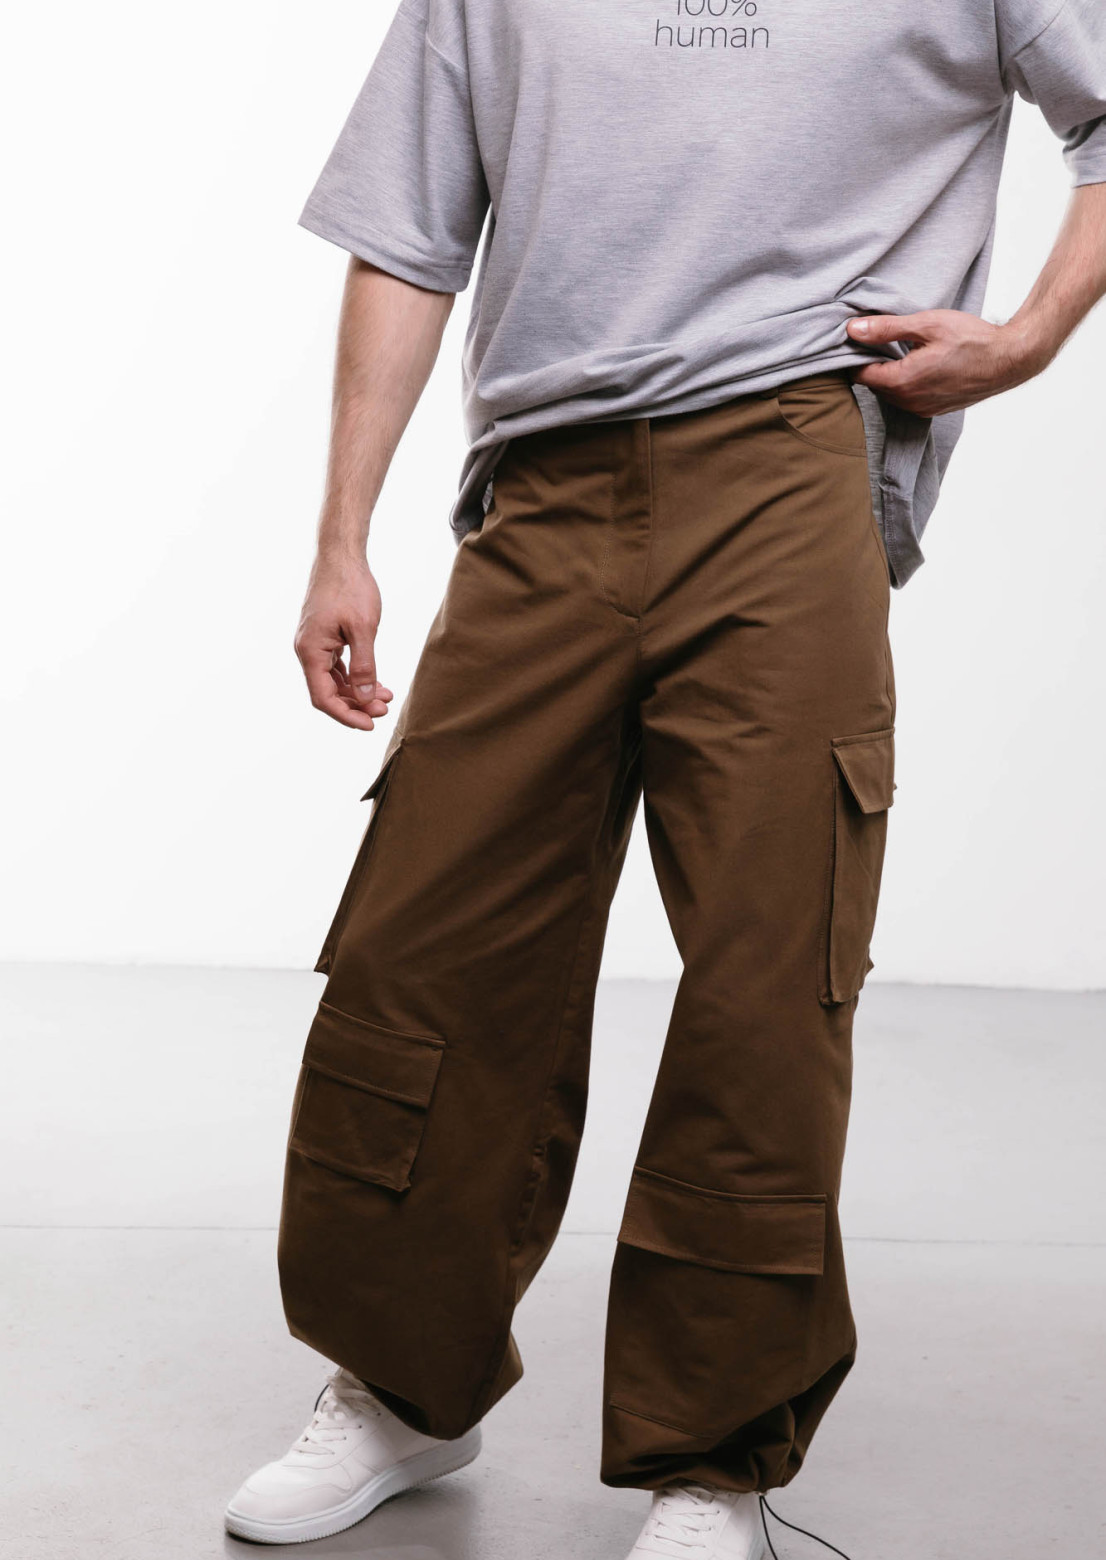 Khaki сargo pants made of dense cotton